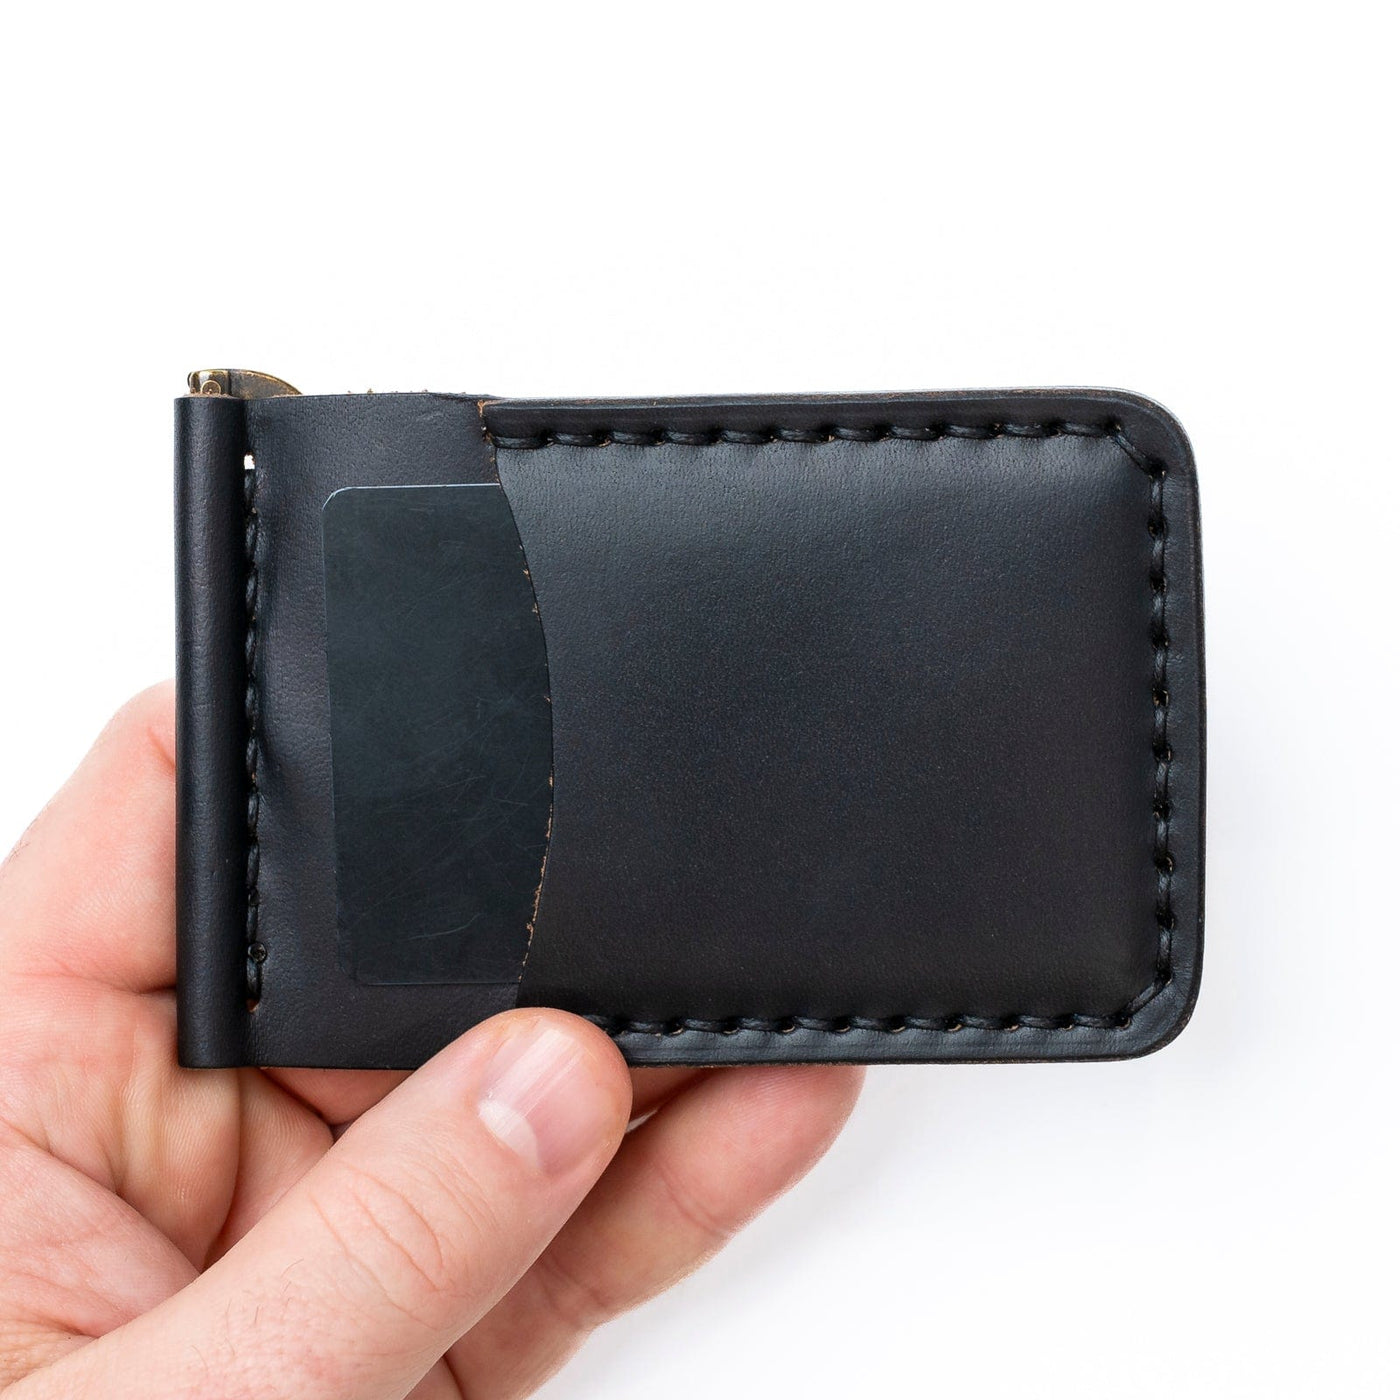 Black Money Clip Wallet: Slim & Durable for Front-Pocket Carry